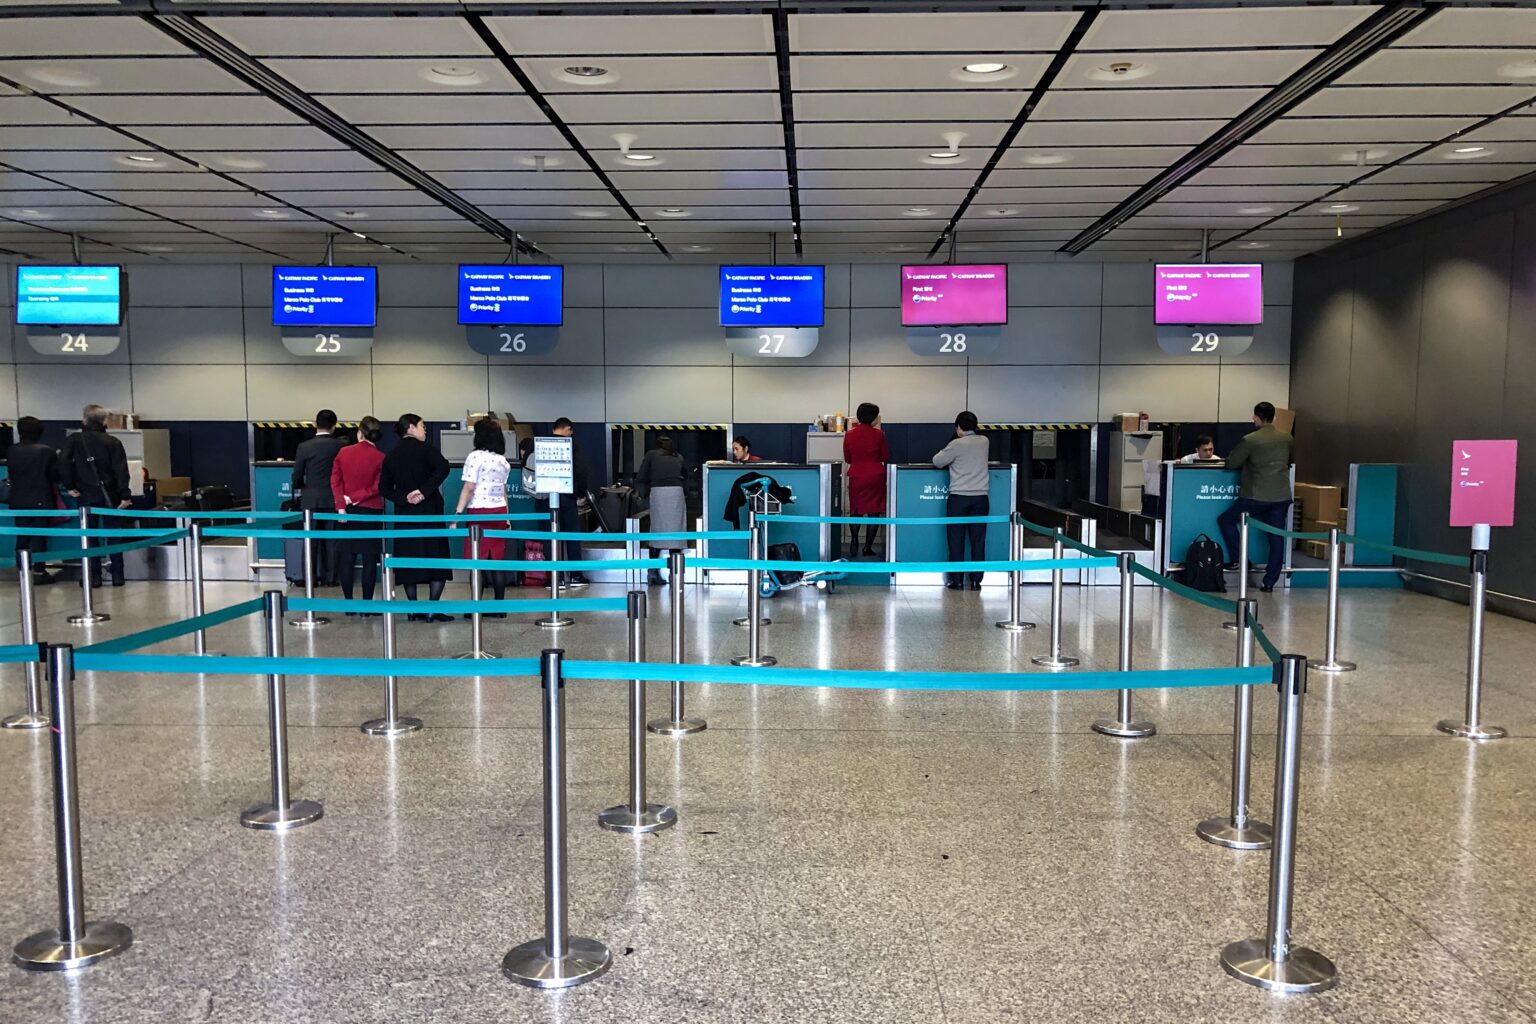 Passengers at the Cathay Pacific check-in counters at the Hong Kong MTR Station